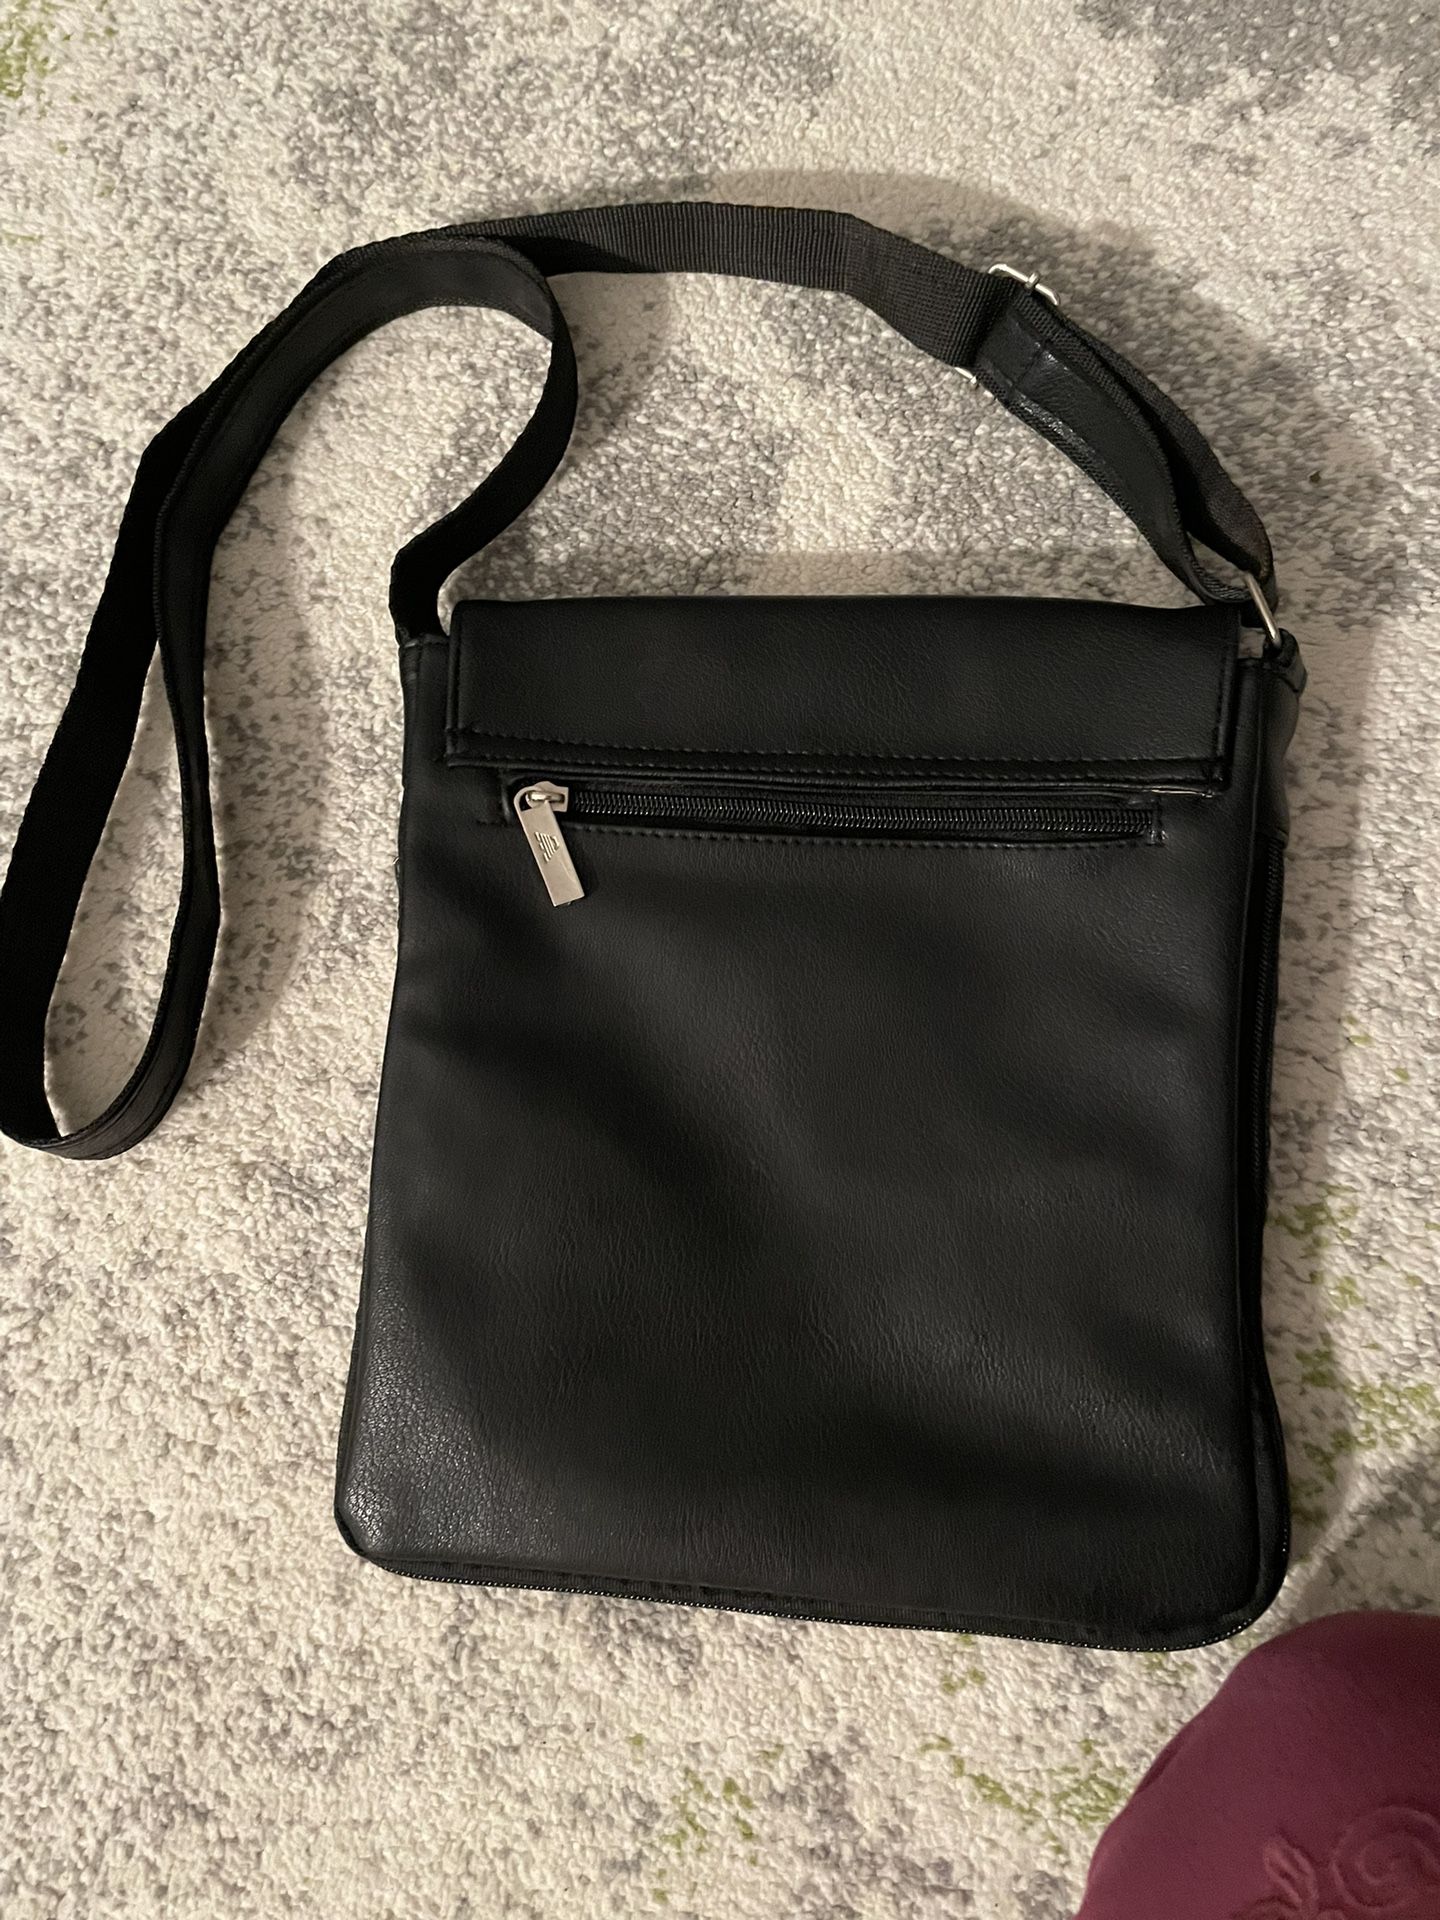 Leather Bag 9 X10r TBlack